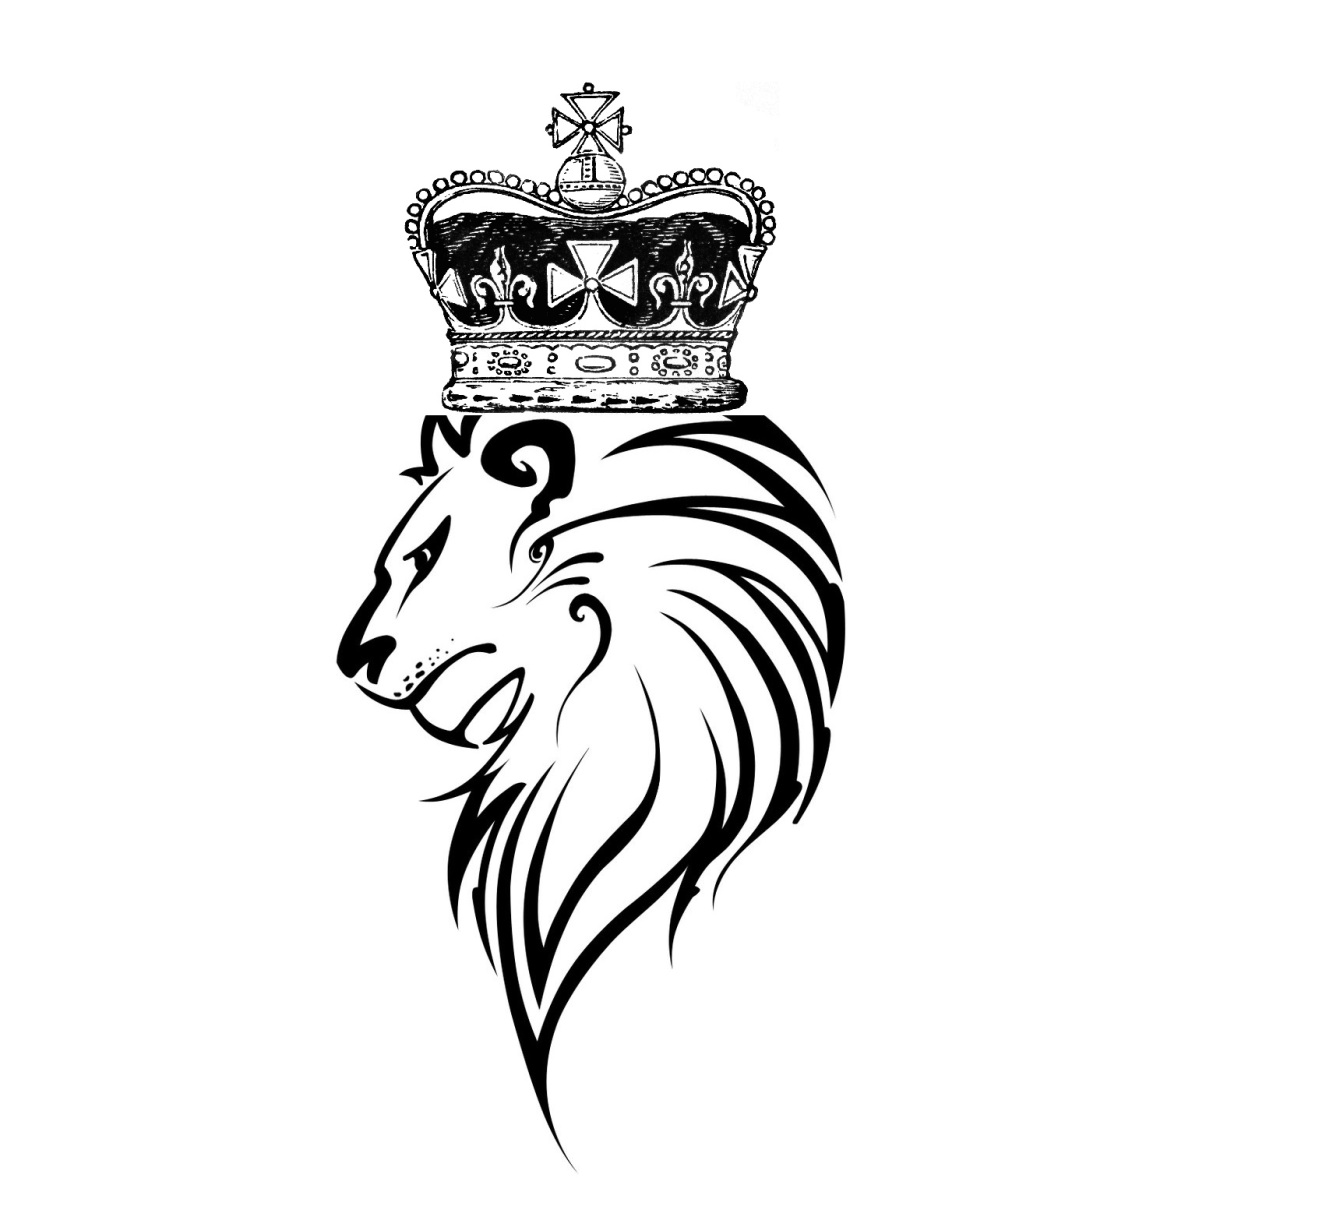 royal-castle-logo.jpg?w=1340